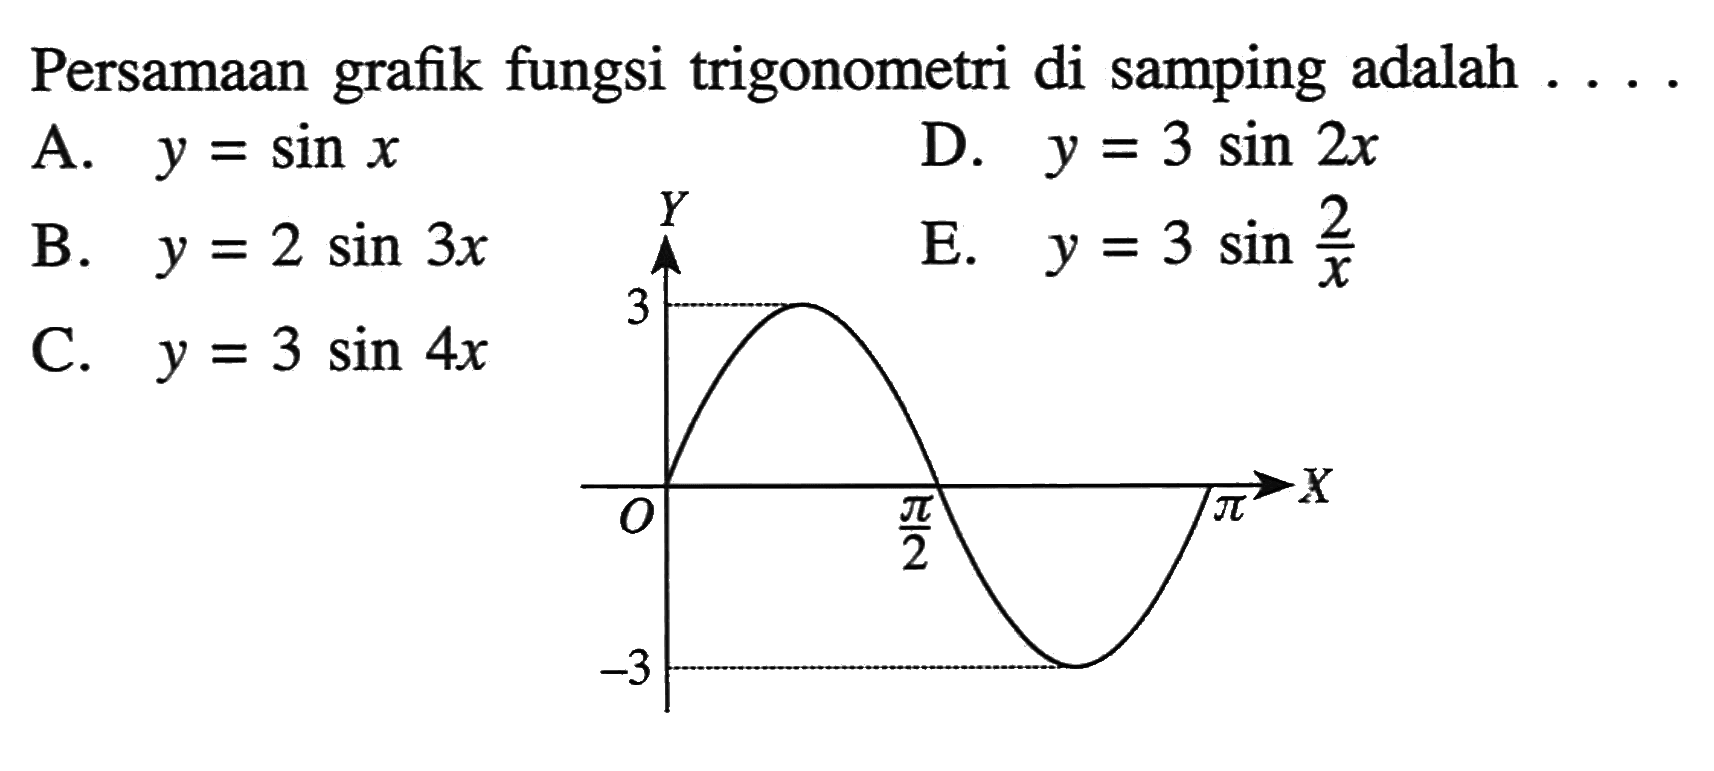 Persamaan grafik fungsi trigonometri di samping adalah . . . . Y 3 X O pi/2 pi -3